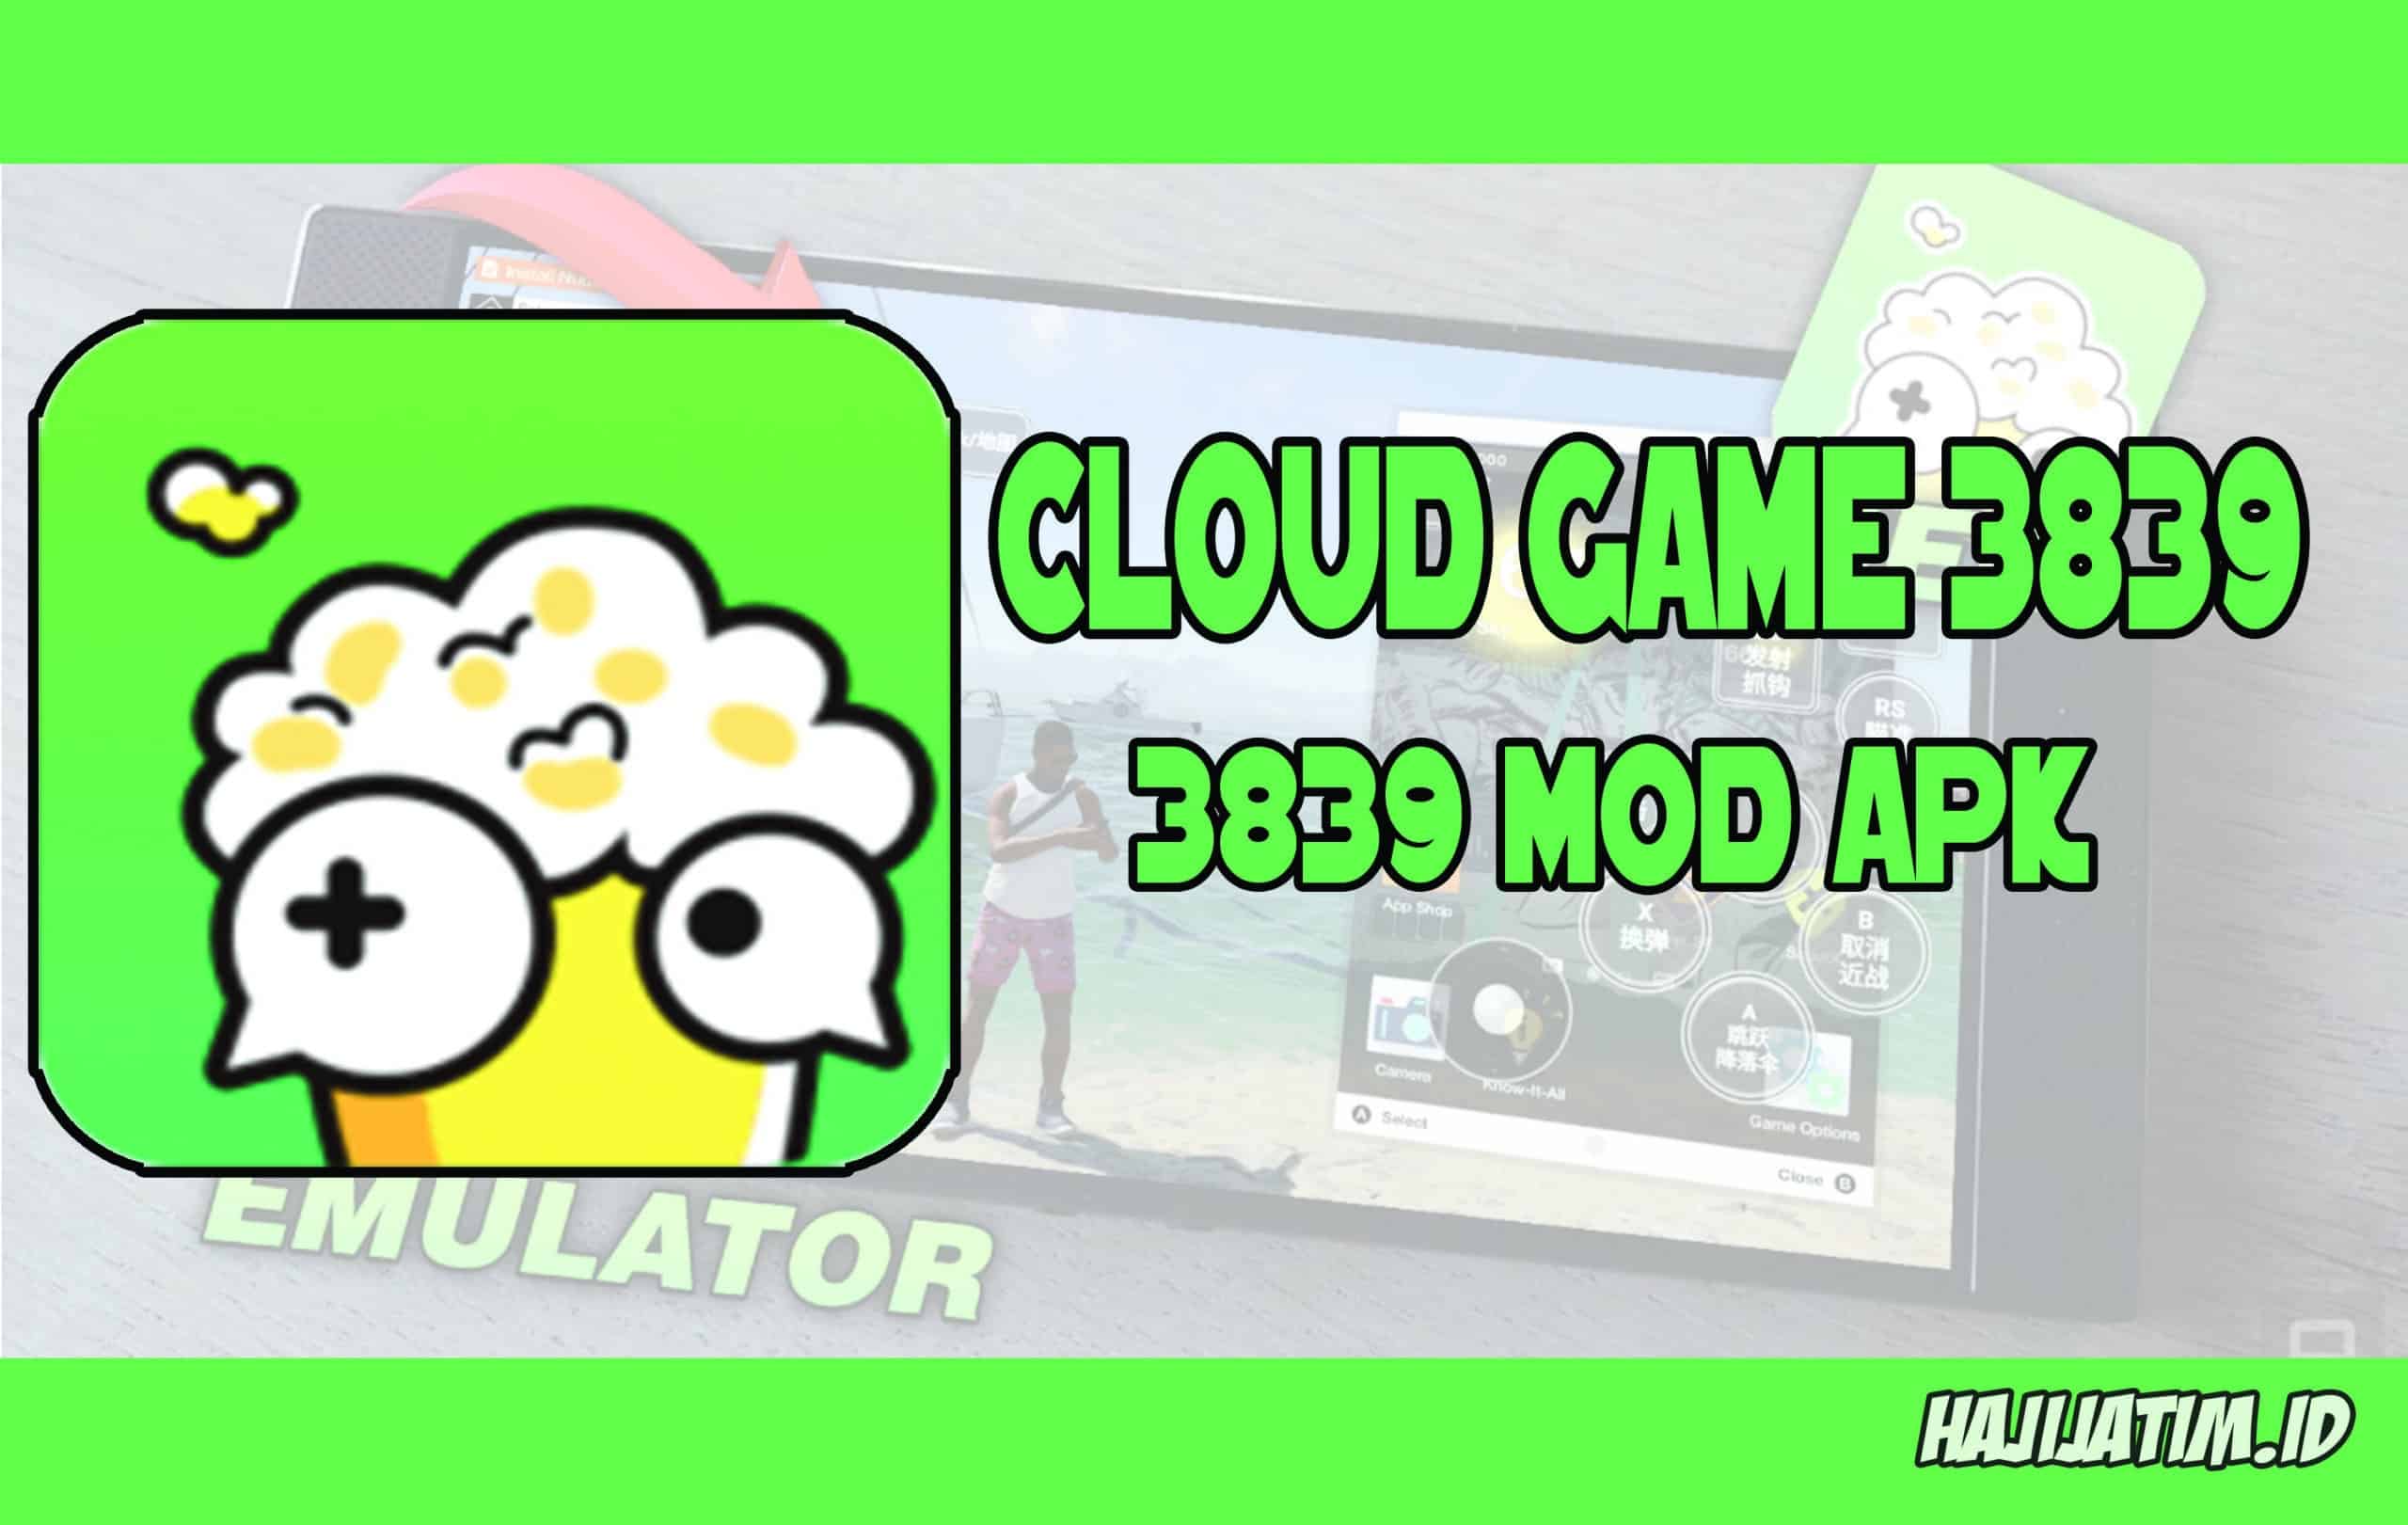 Cloud Game 3839 Mod Apk